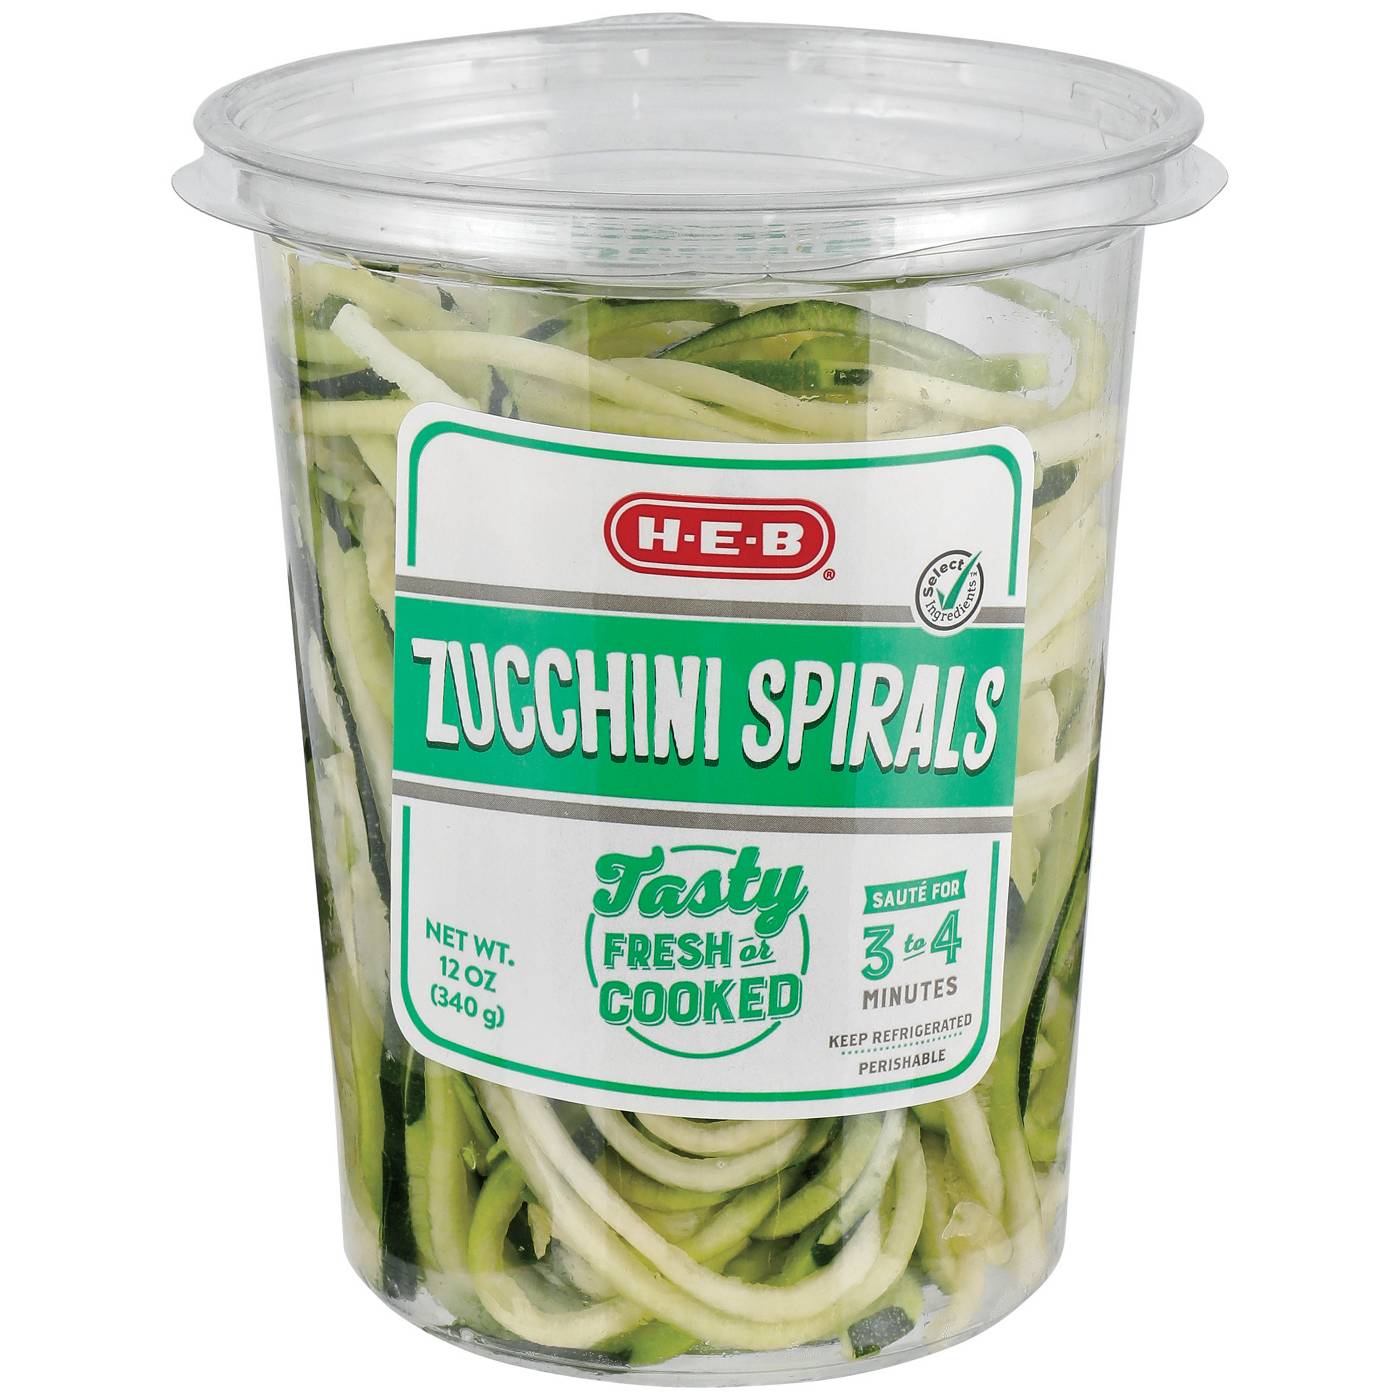 H-E-B Fresh Zucchini Spirals; image 1 of 3